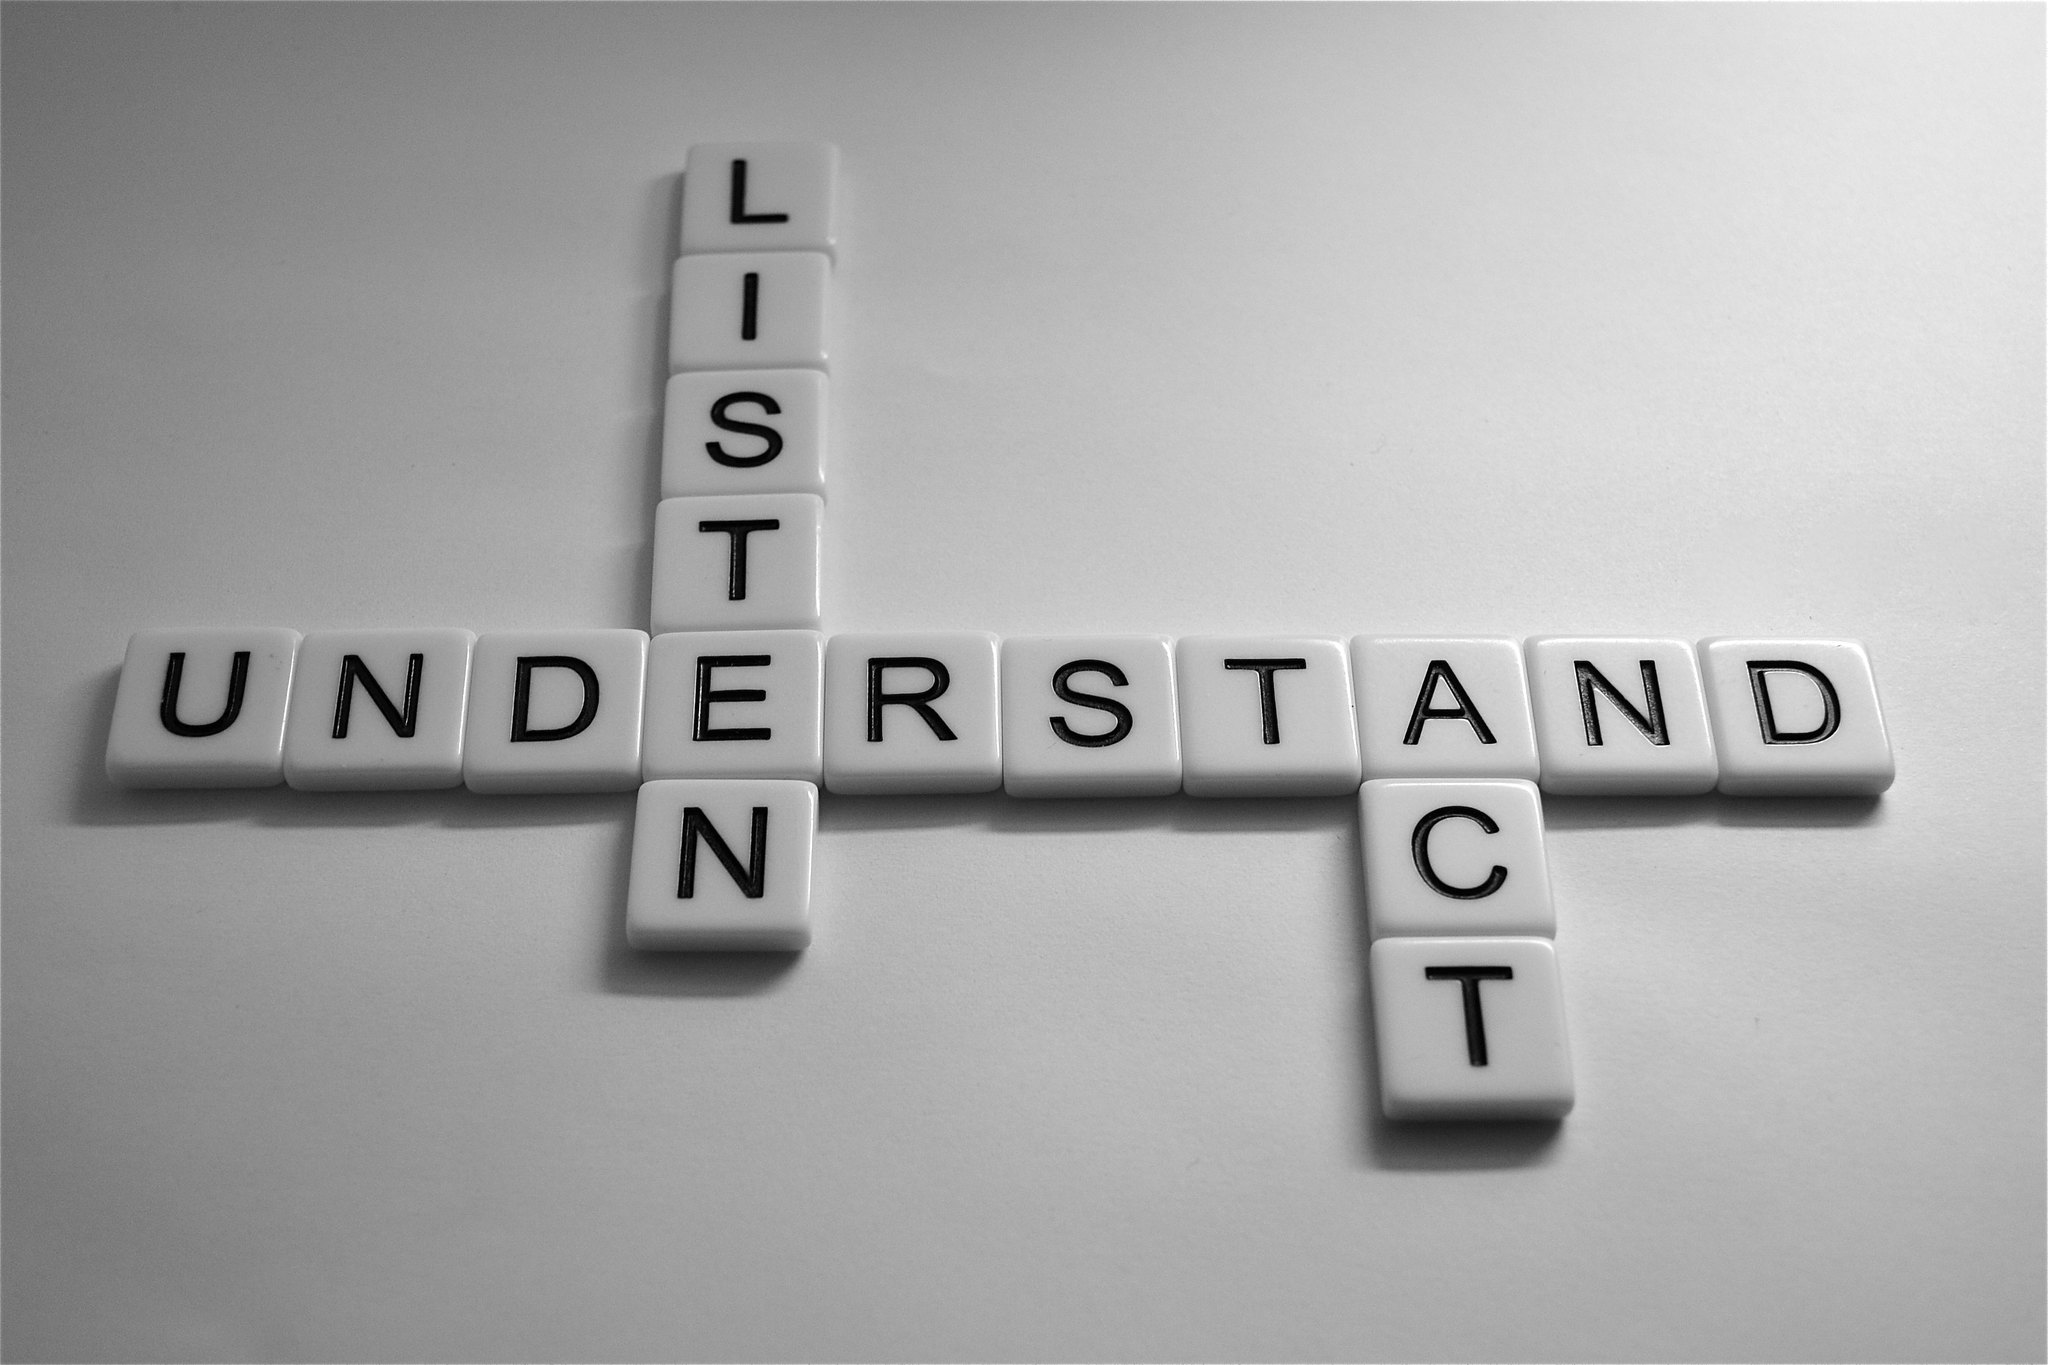 Tiles spell “understand, listen, act.”